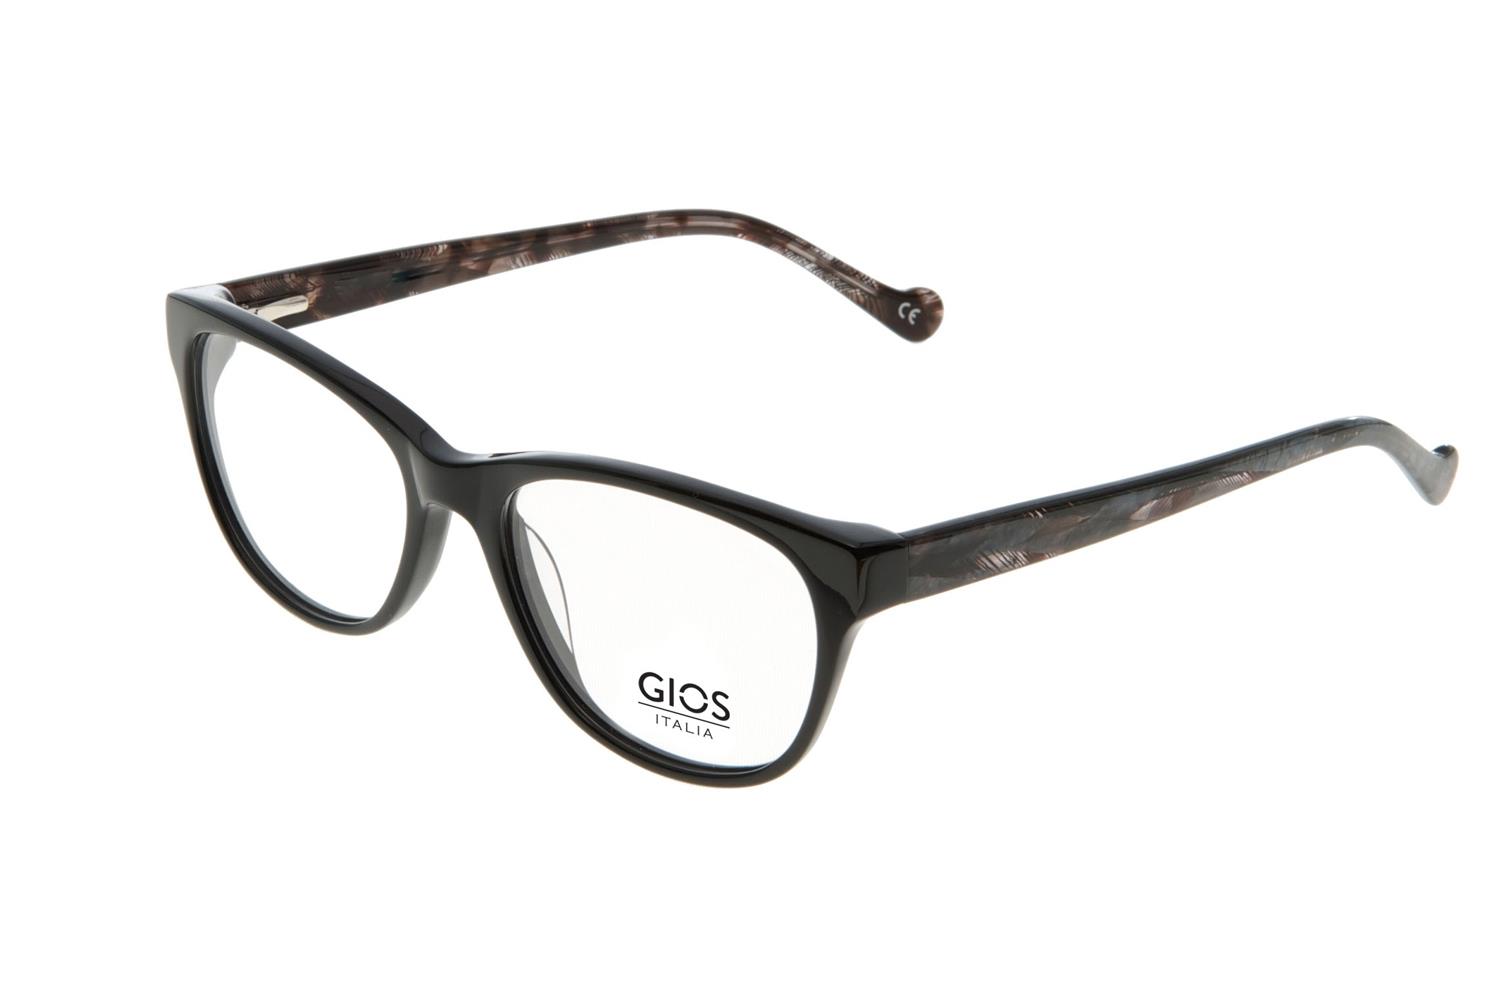 Picture of Gios Italia Eyeglasses RF500040